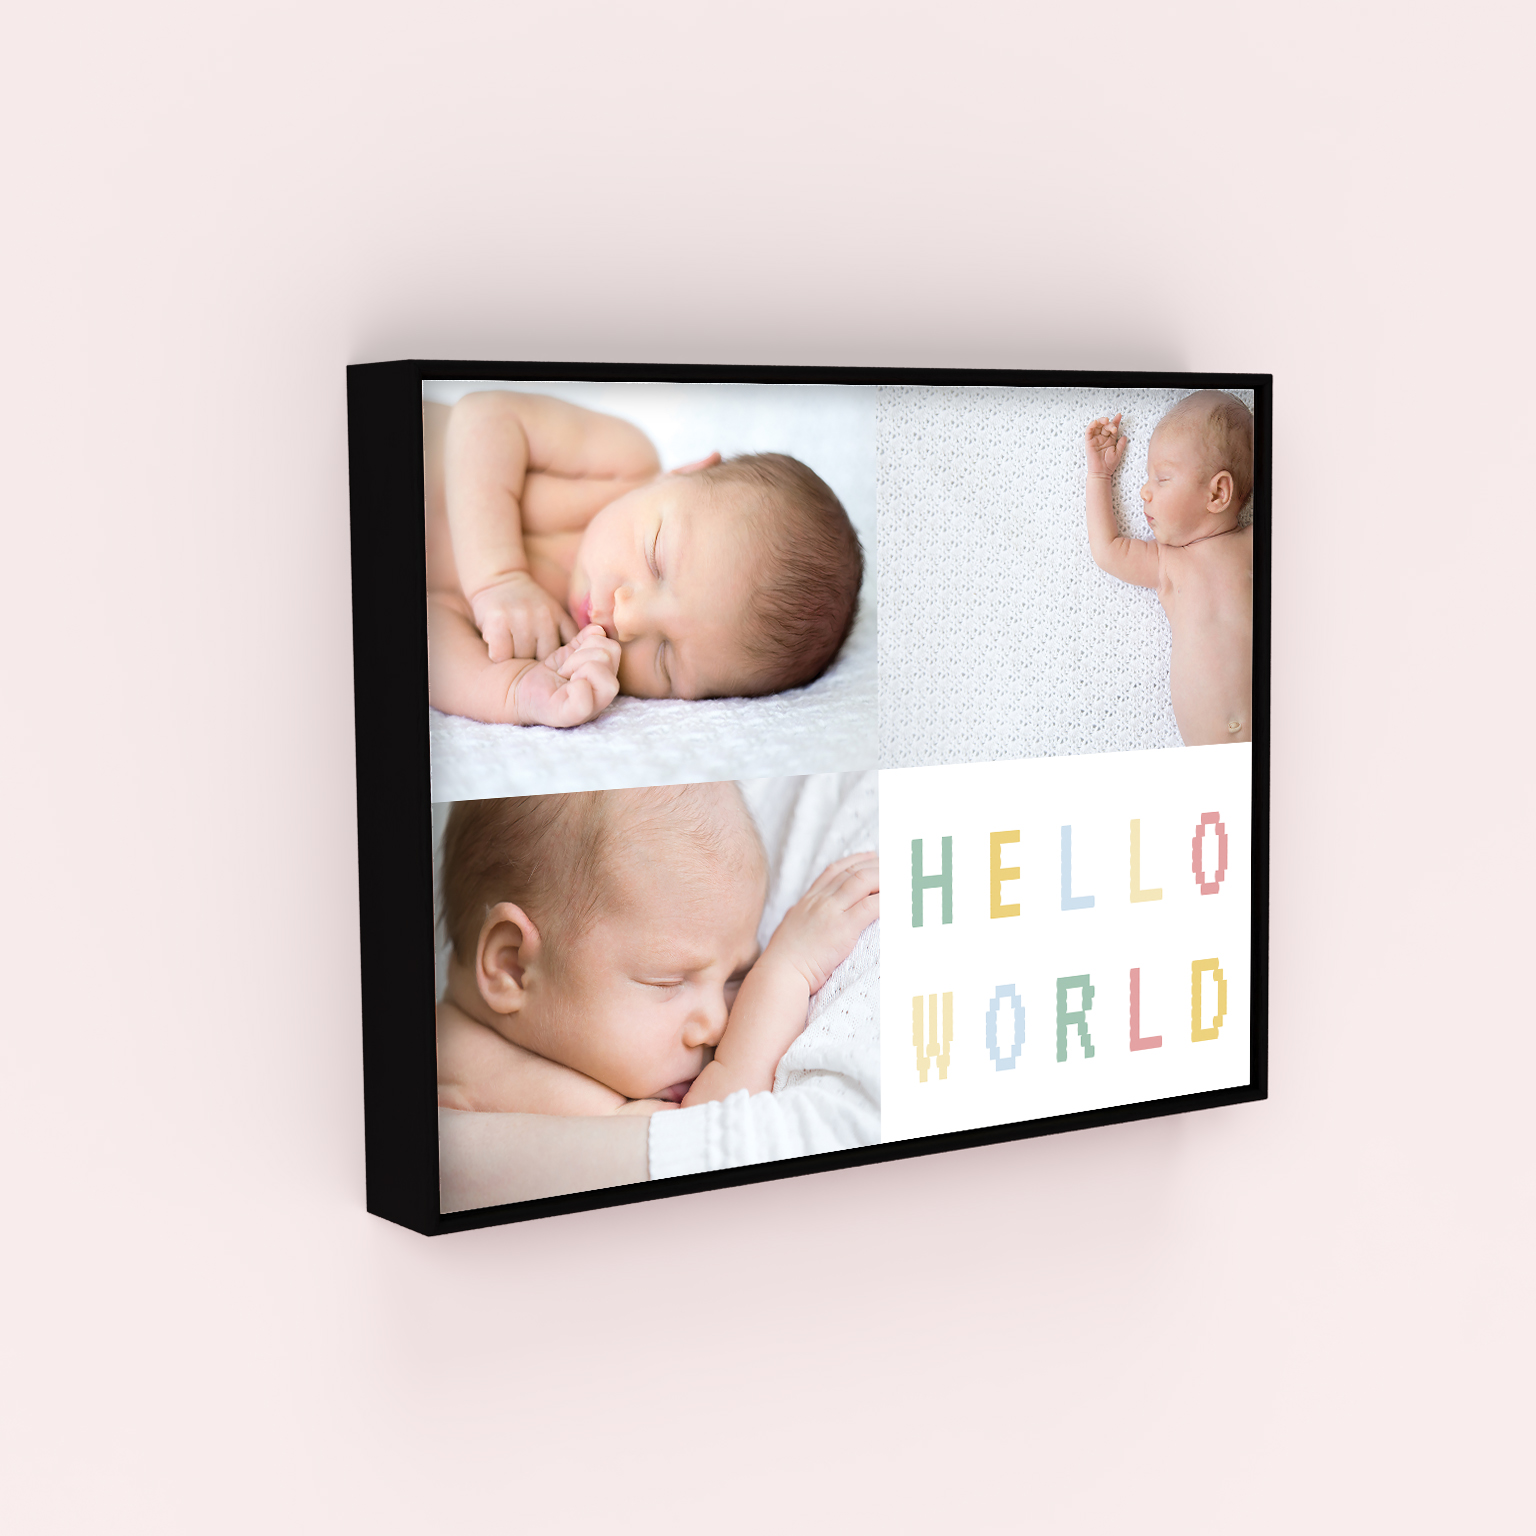 Hello World Corner Boxed Photo Prints - Personalized Keepsake with Three Cherished Photos